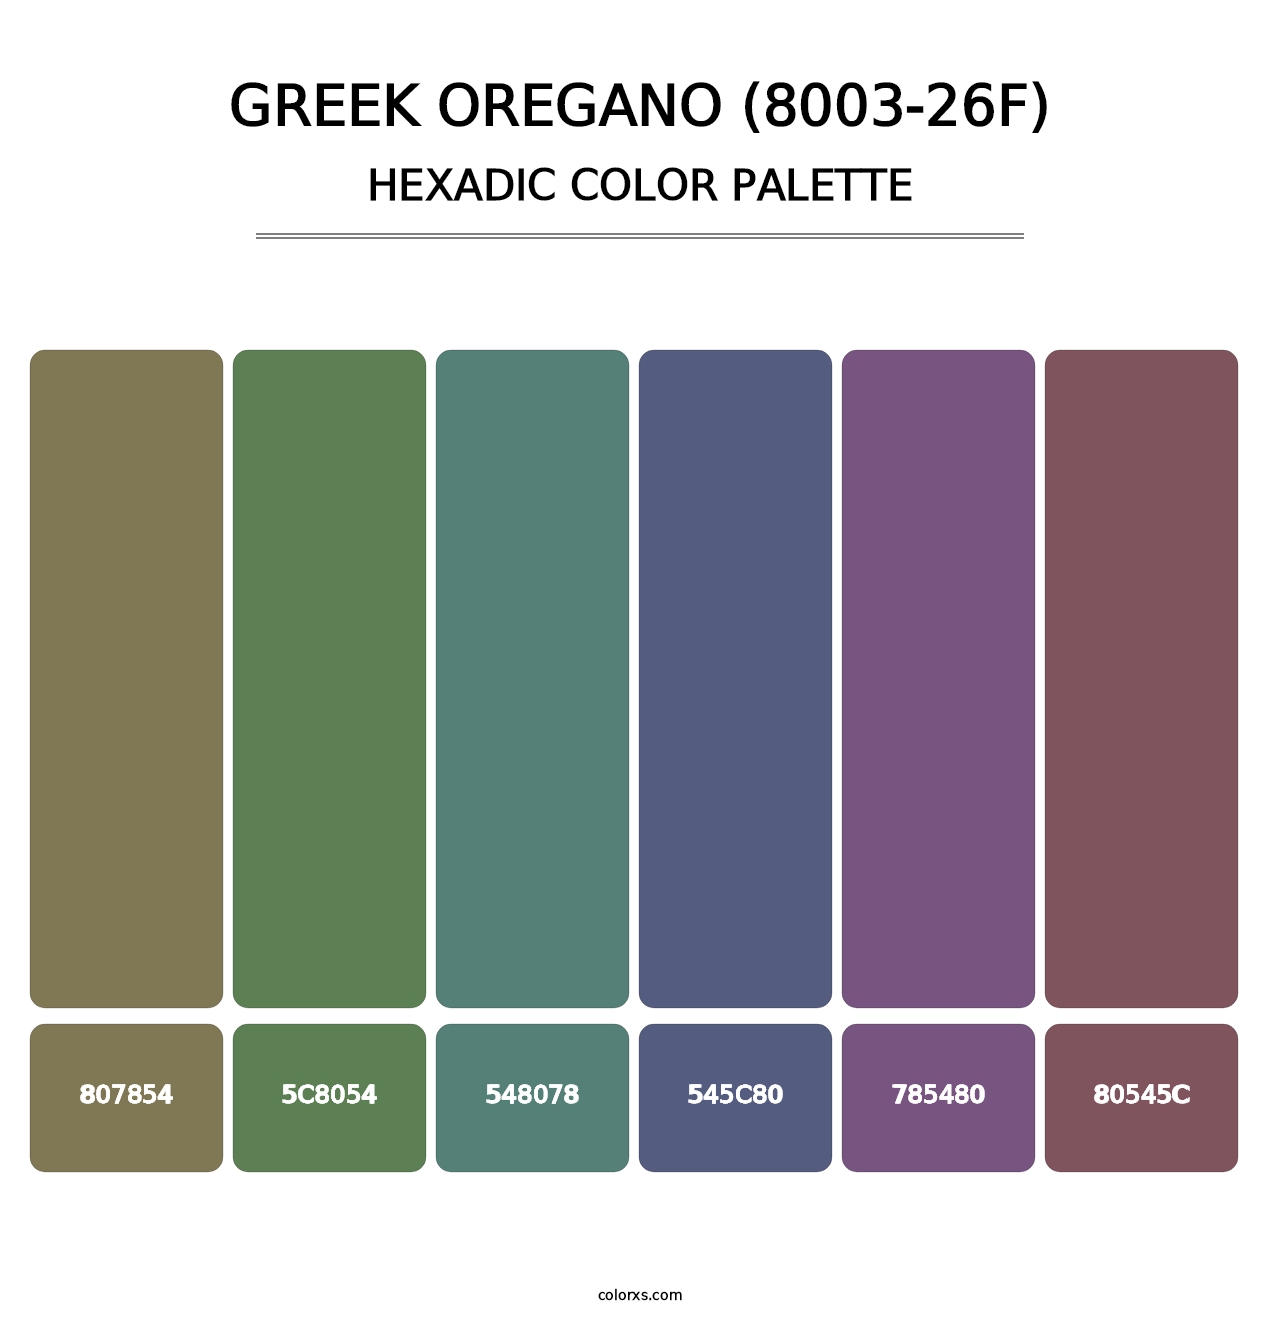 Greek Oregano (8003-26F) - Hexadic Color Palette